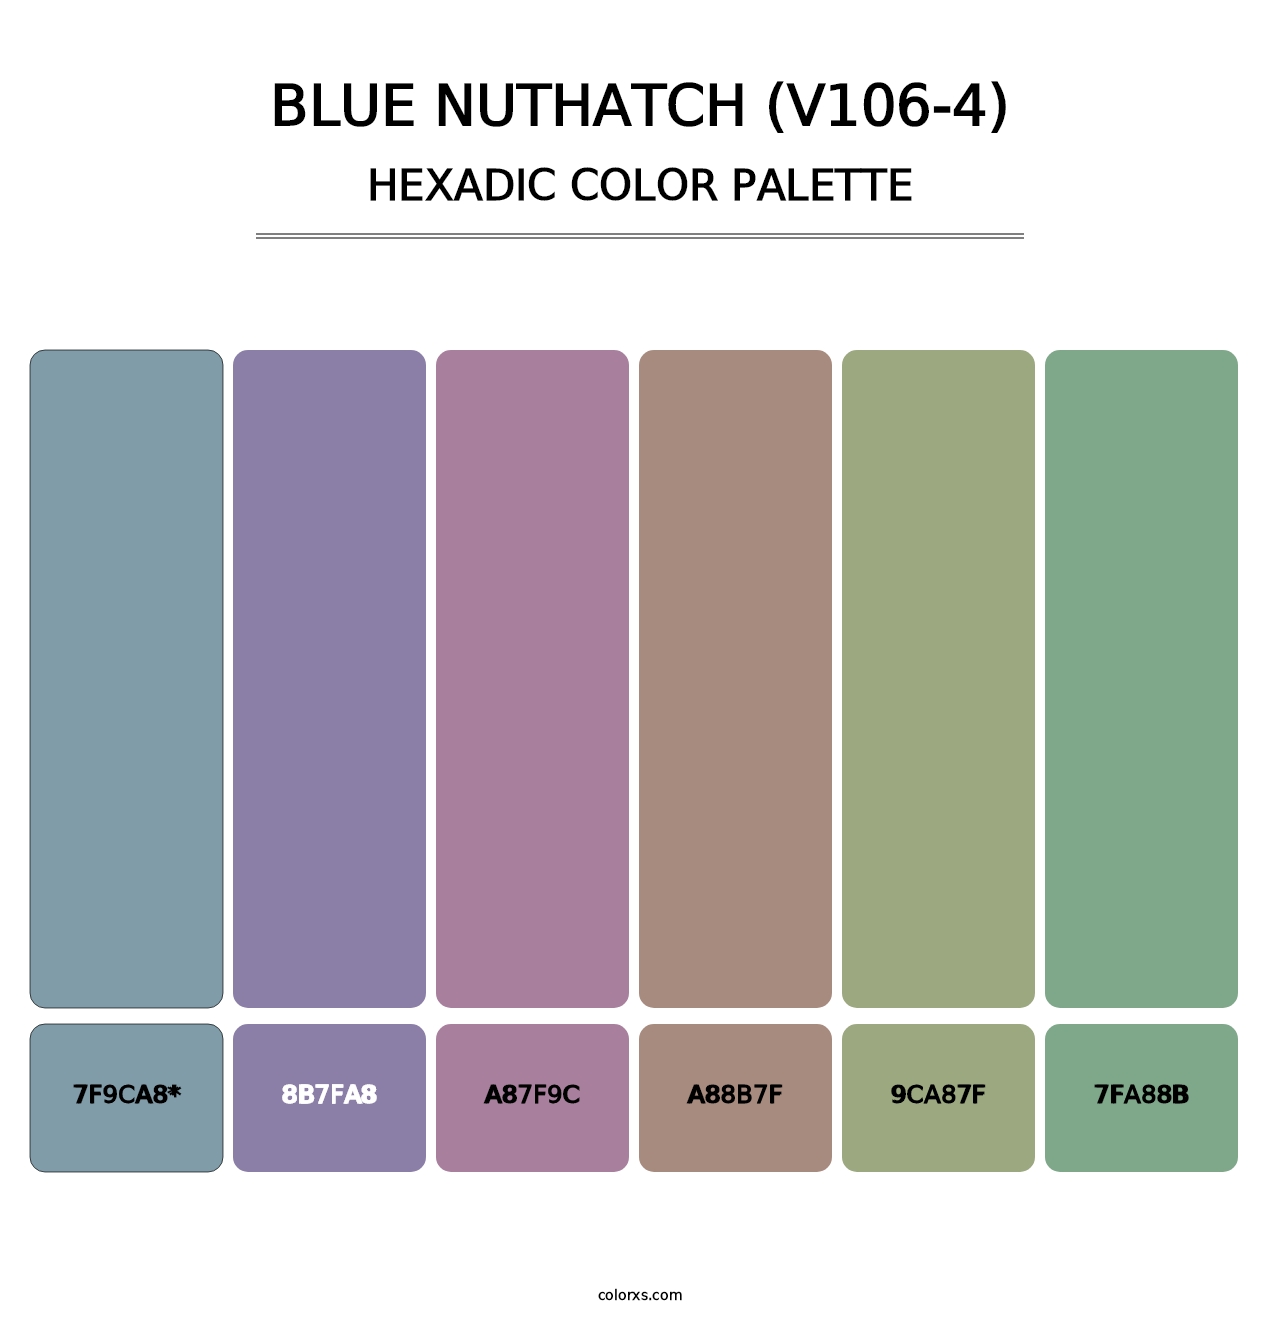 Blue Nuthatch (V106-4) - Hexadic Color Palette